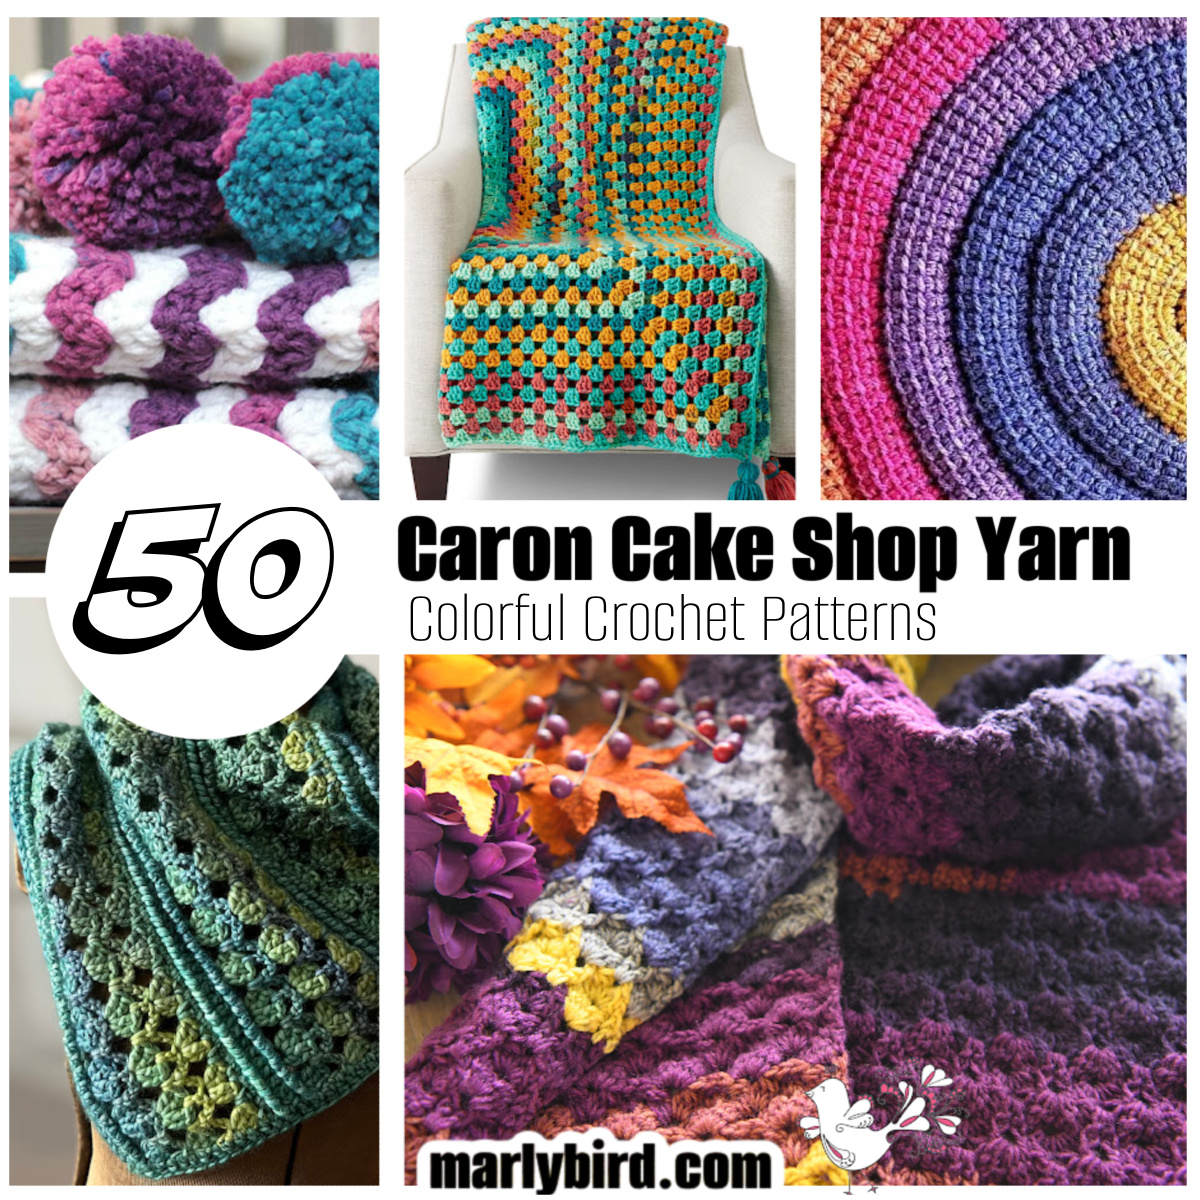 Caron Cakes Cluster V-Stitch Blanket